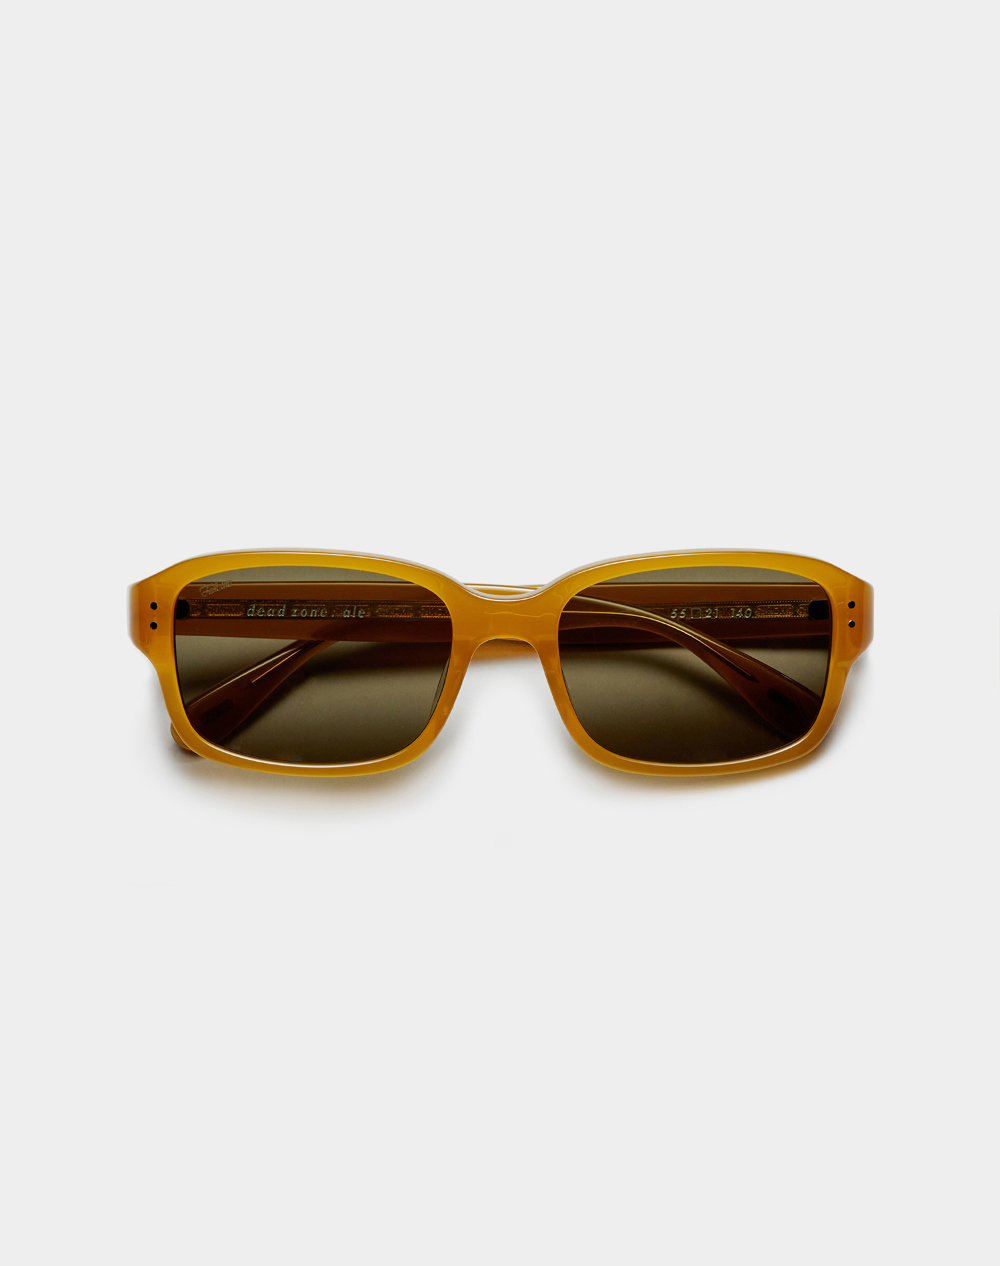 glasses mustard color image-S1L4